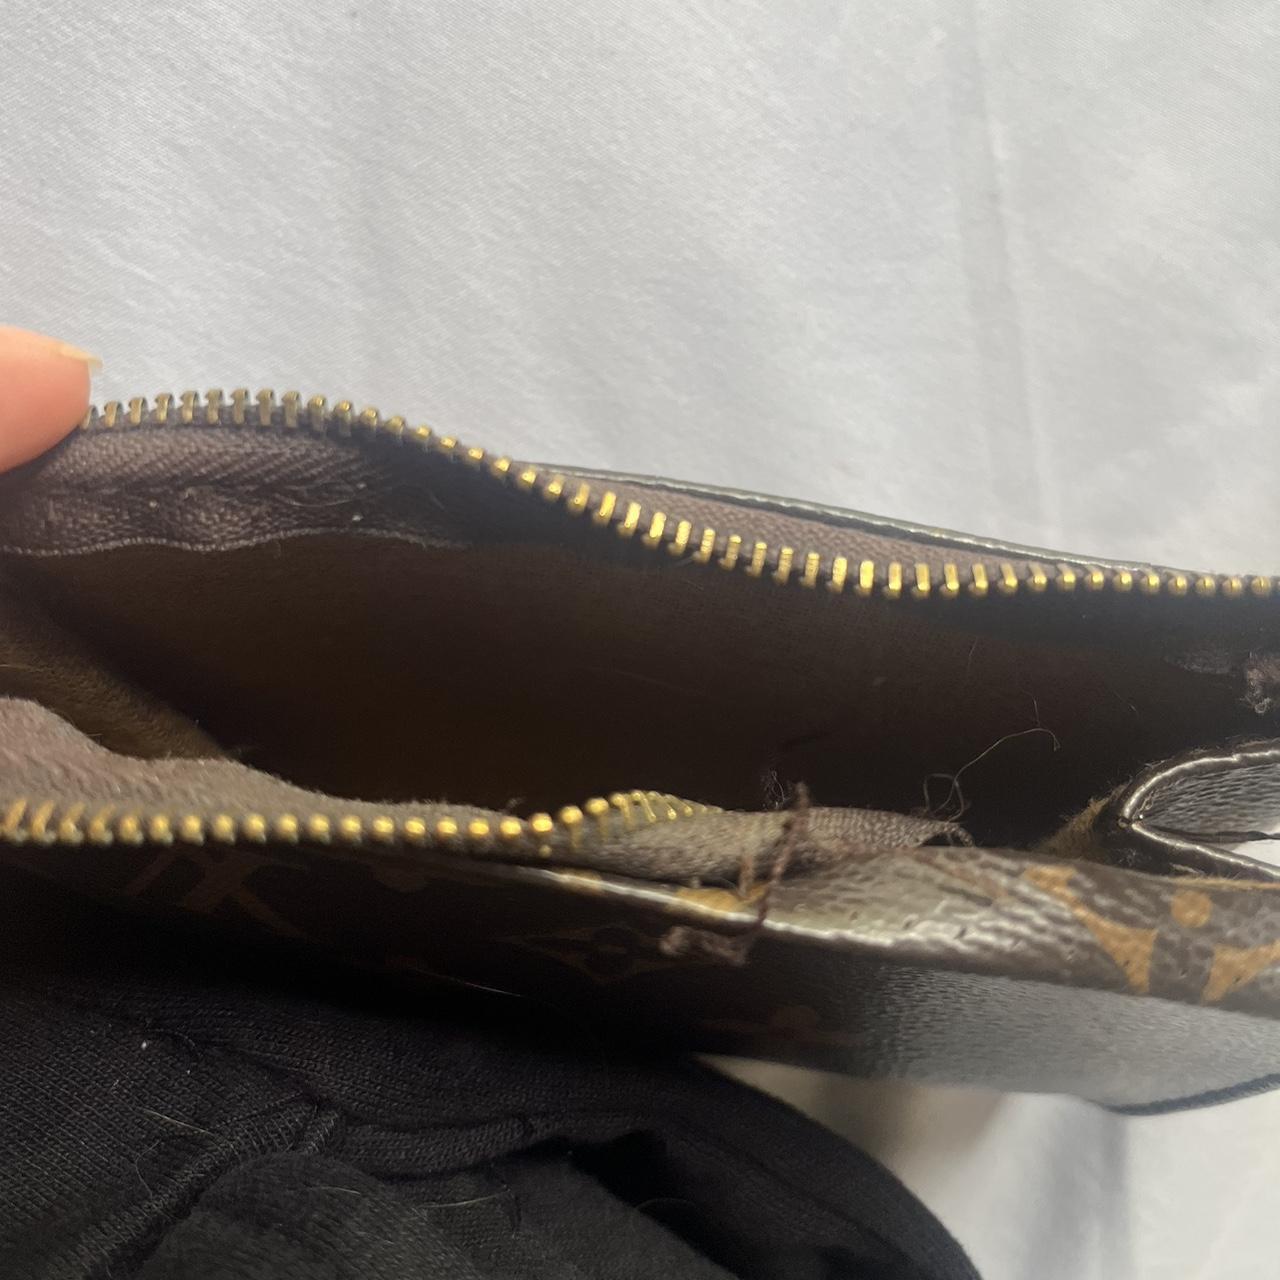 AUTHENTIC LV Wallet Very worn but still works - Depop